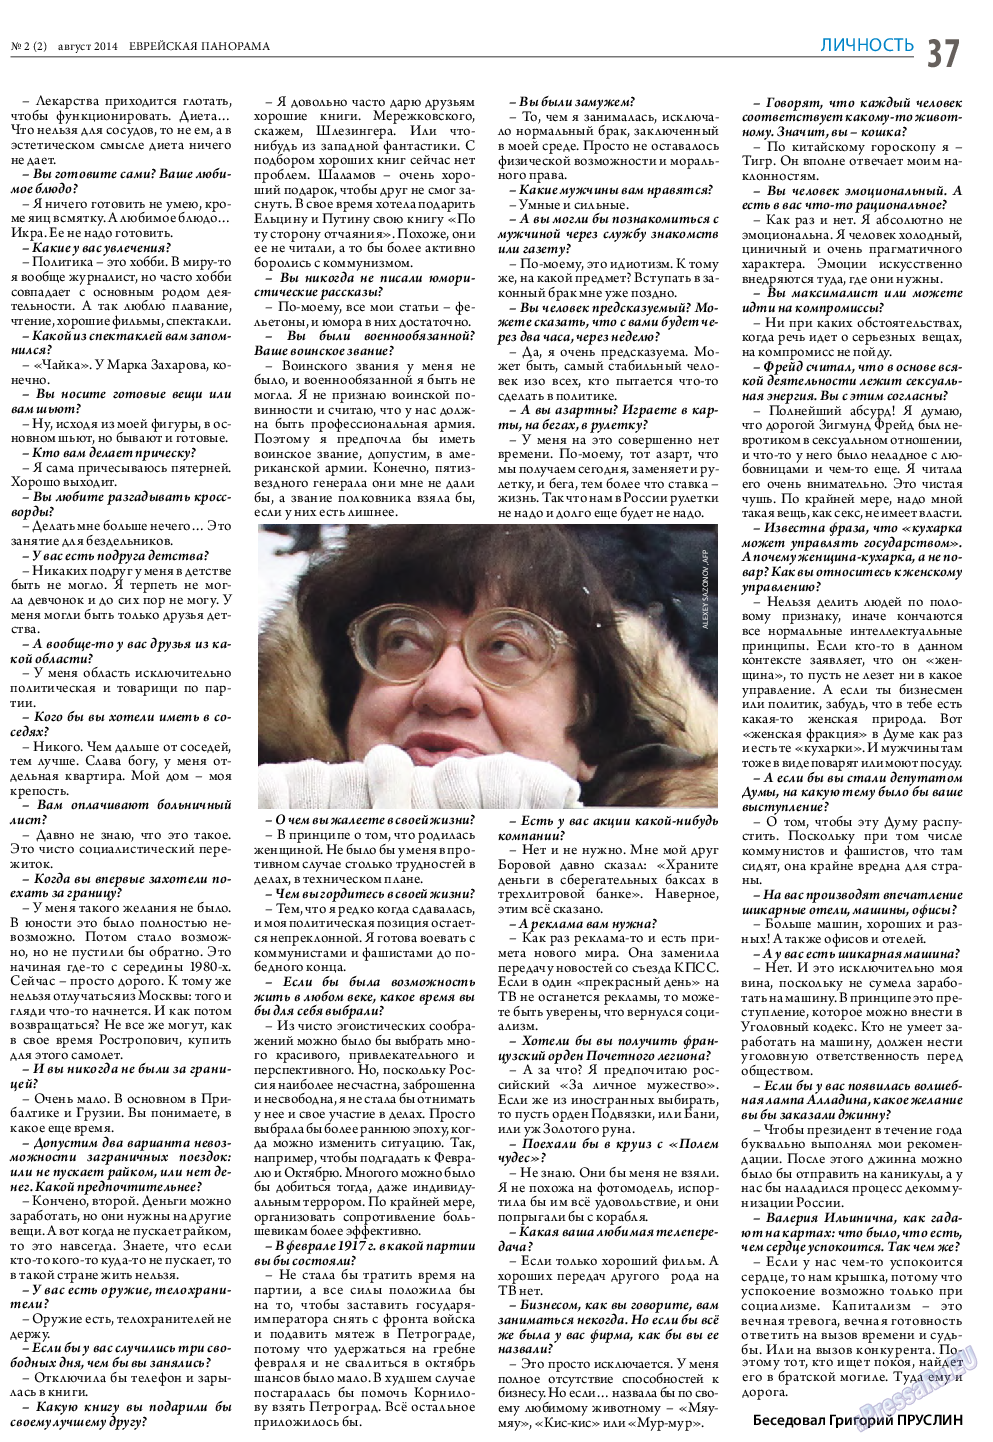 Еврейская панорама, газета. 2014 №2 стр.37